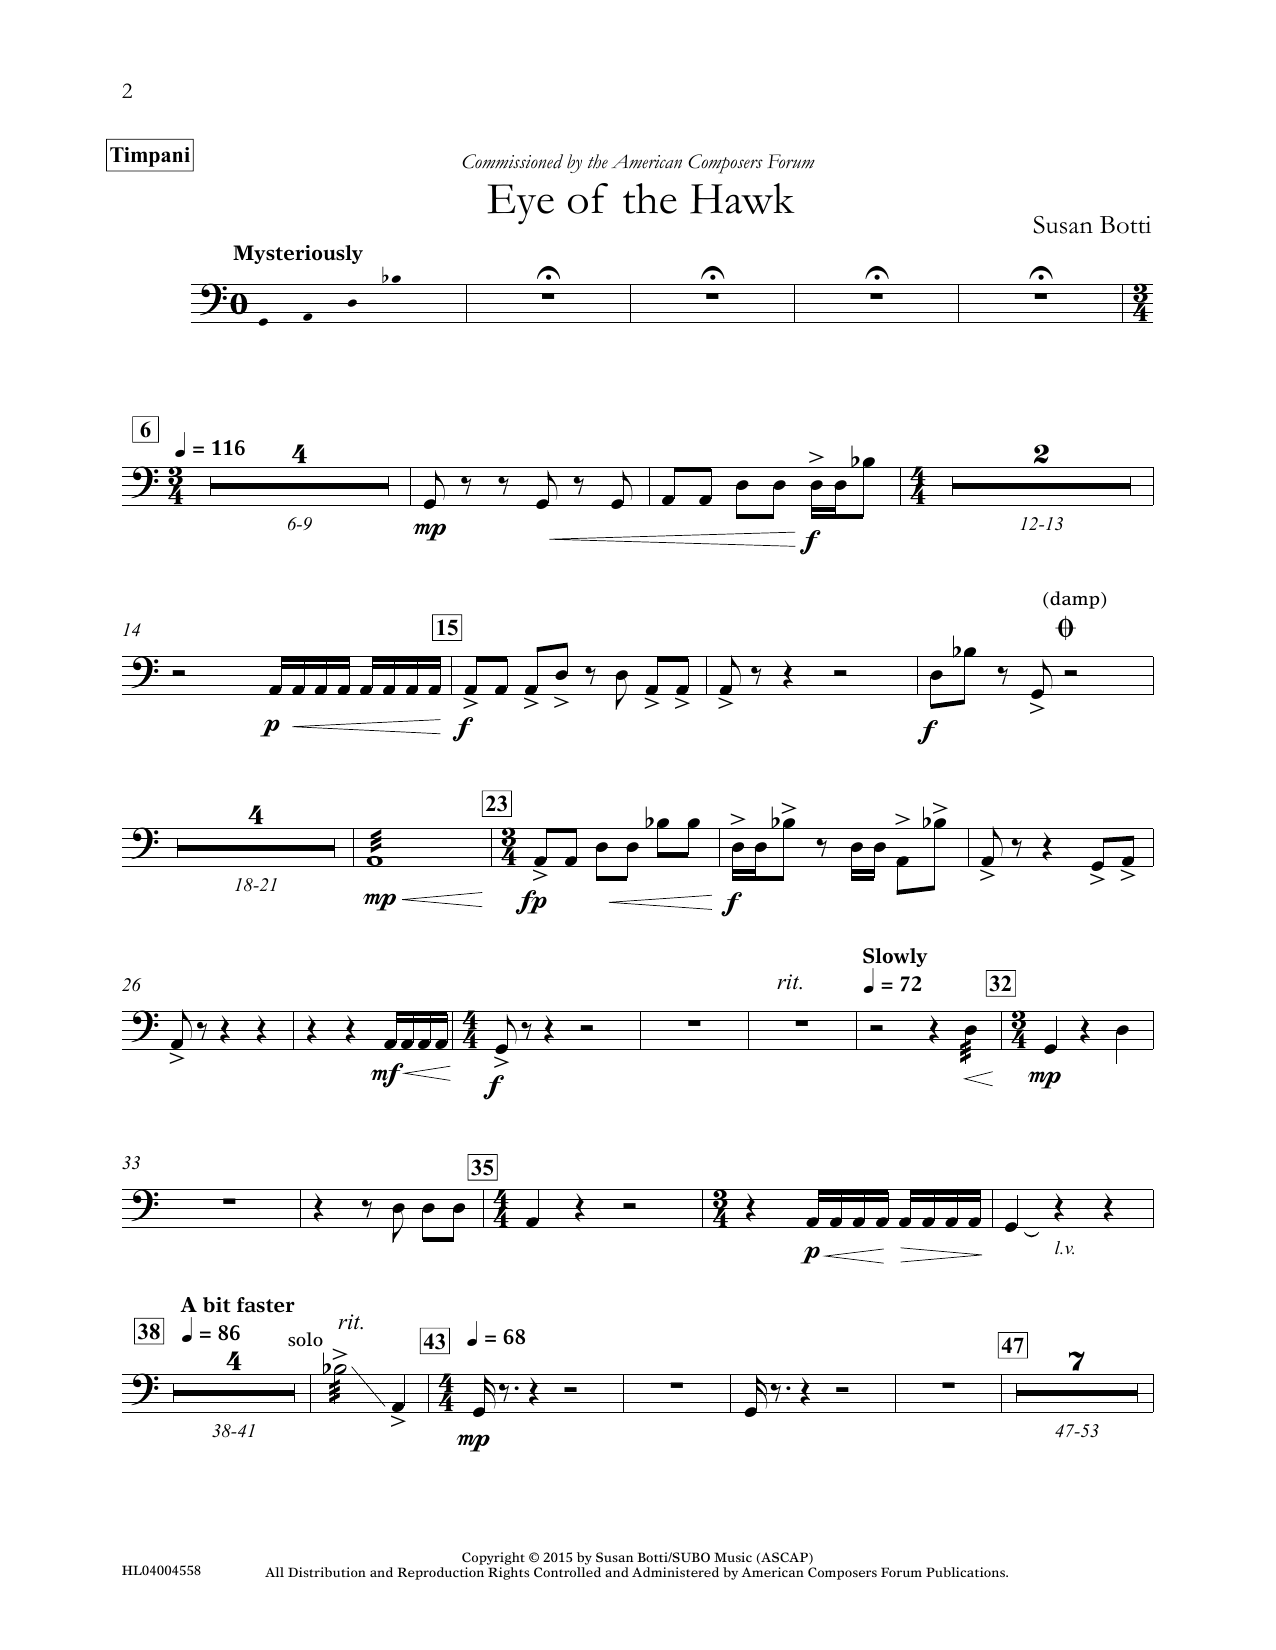 Susan Botti Eye of the Hawk - Timpani Sheet Music Notes & Chords for Concert Band - Download or Print PDF